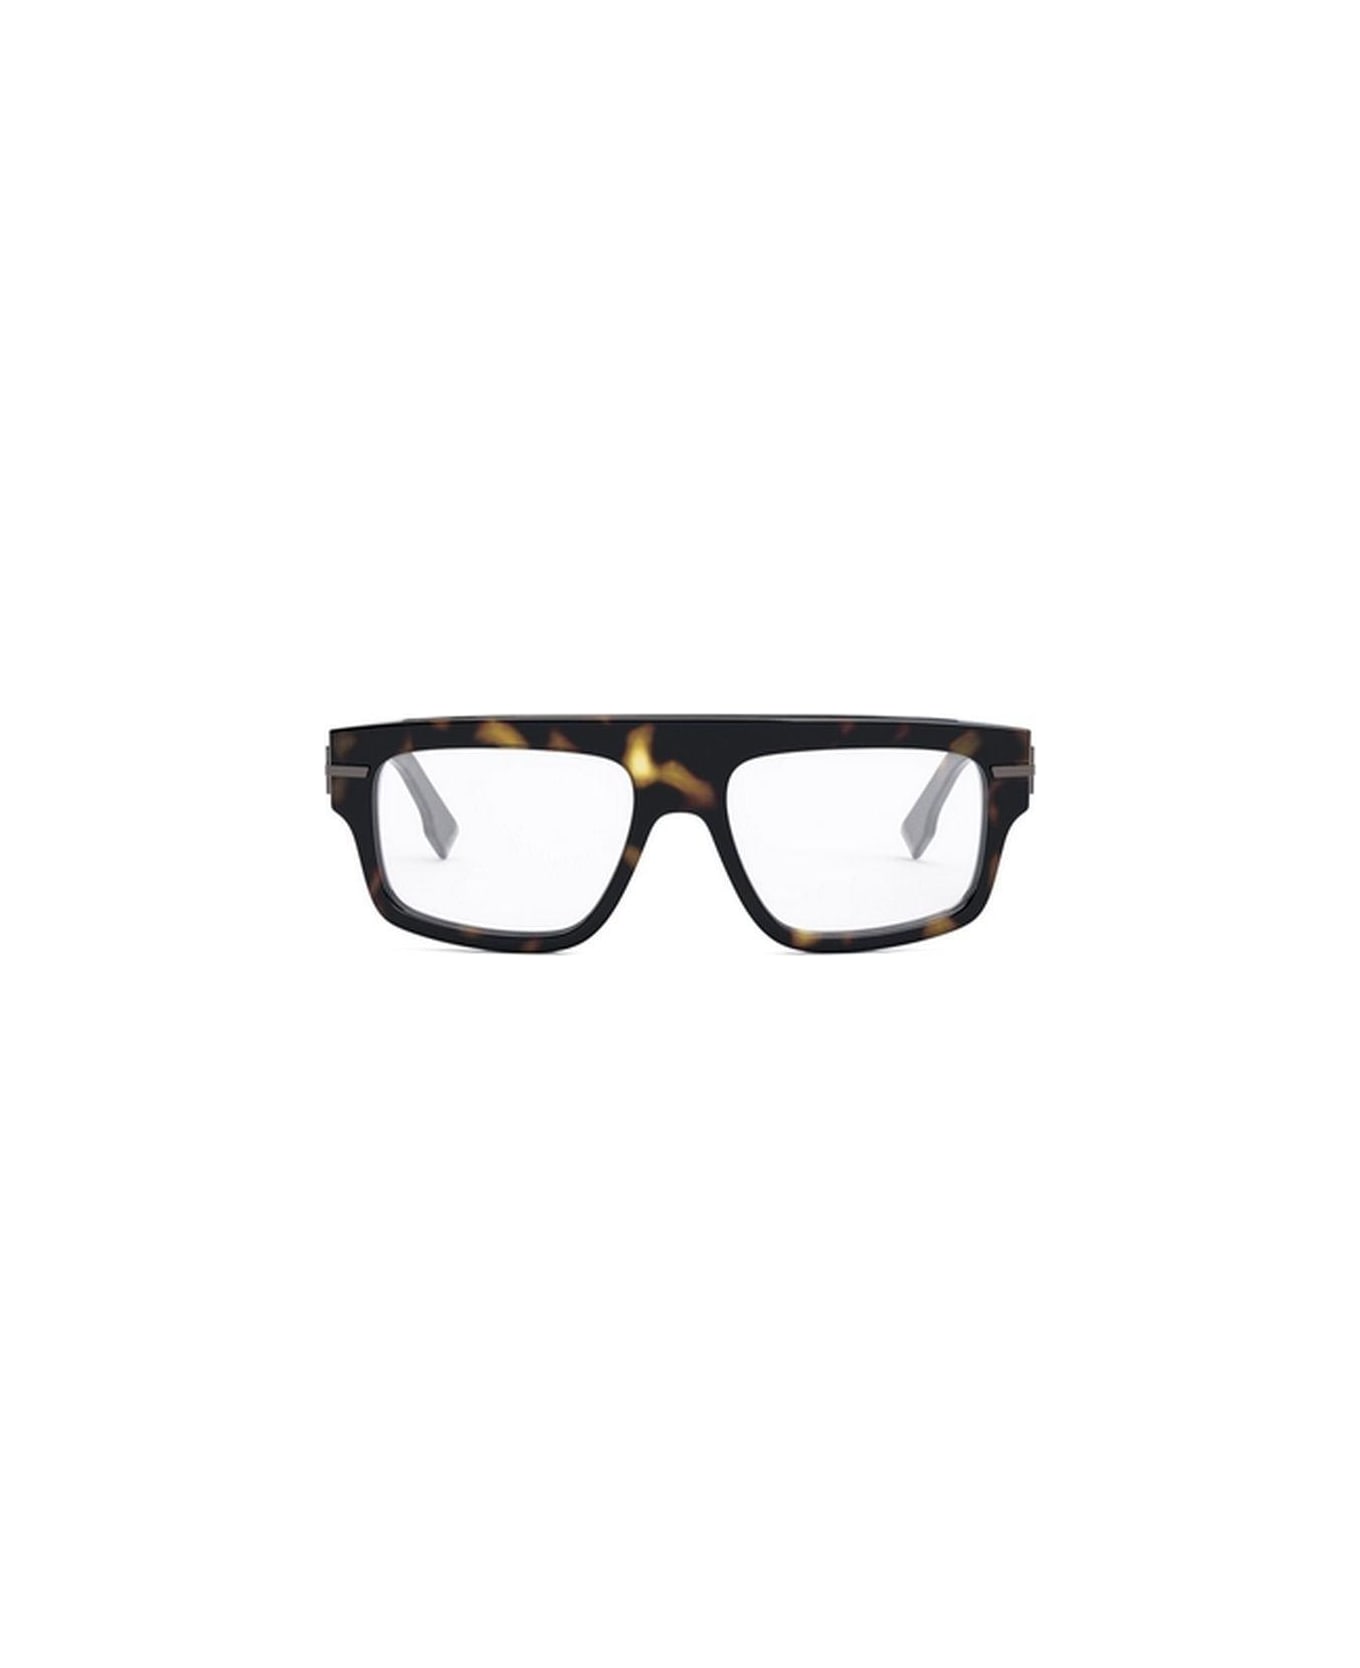 Fendi Eyewear Rectangular-frame Glasses - 052